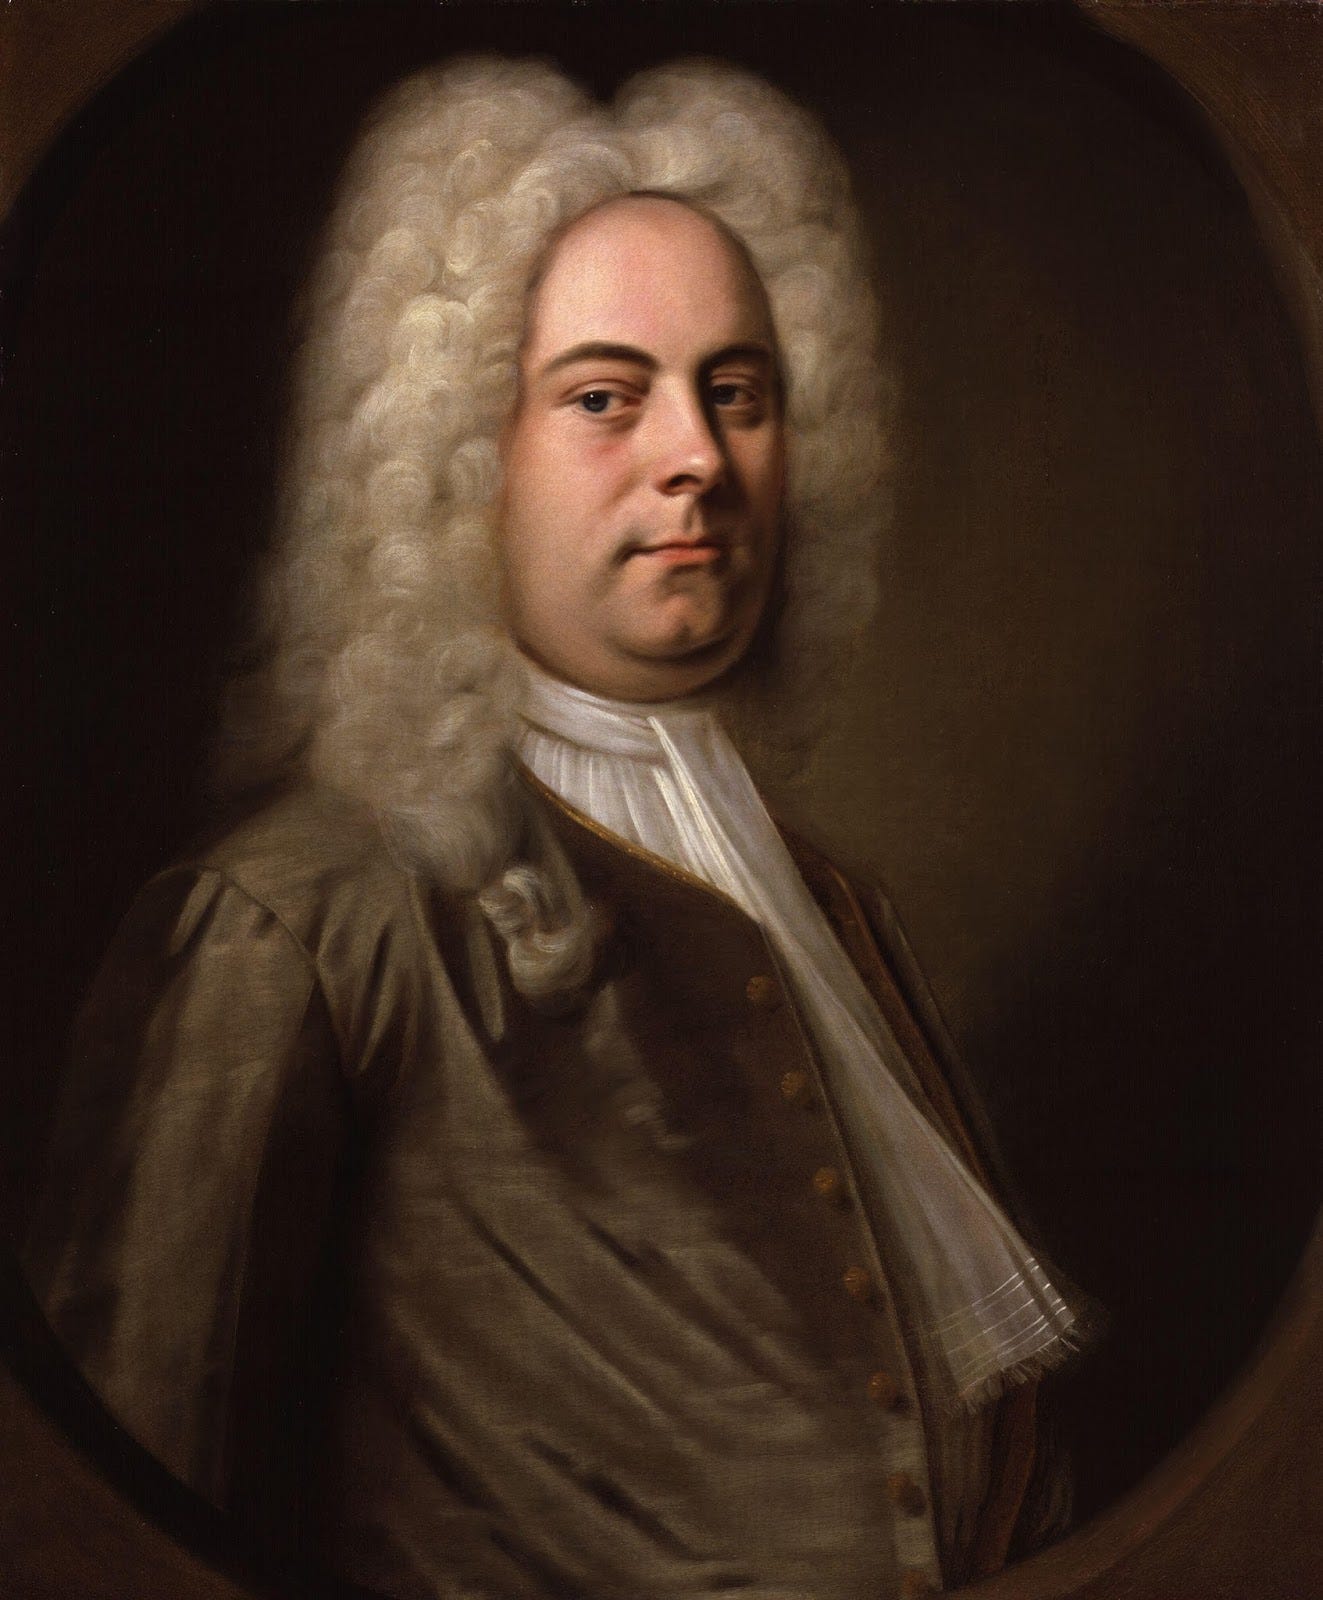 Bath, Art and Architecture: A Few Portraits of Handel